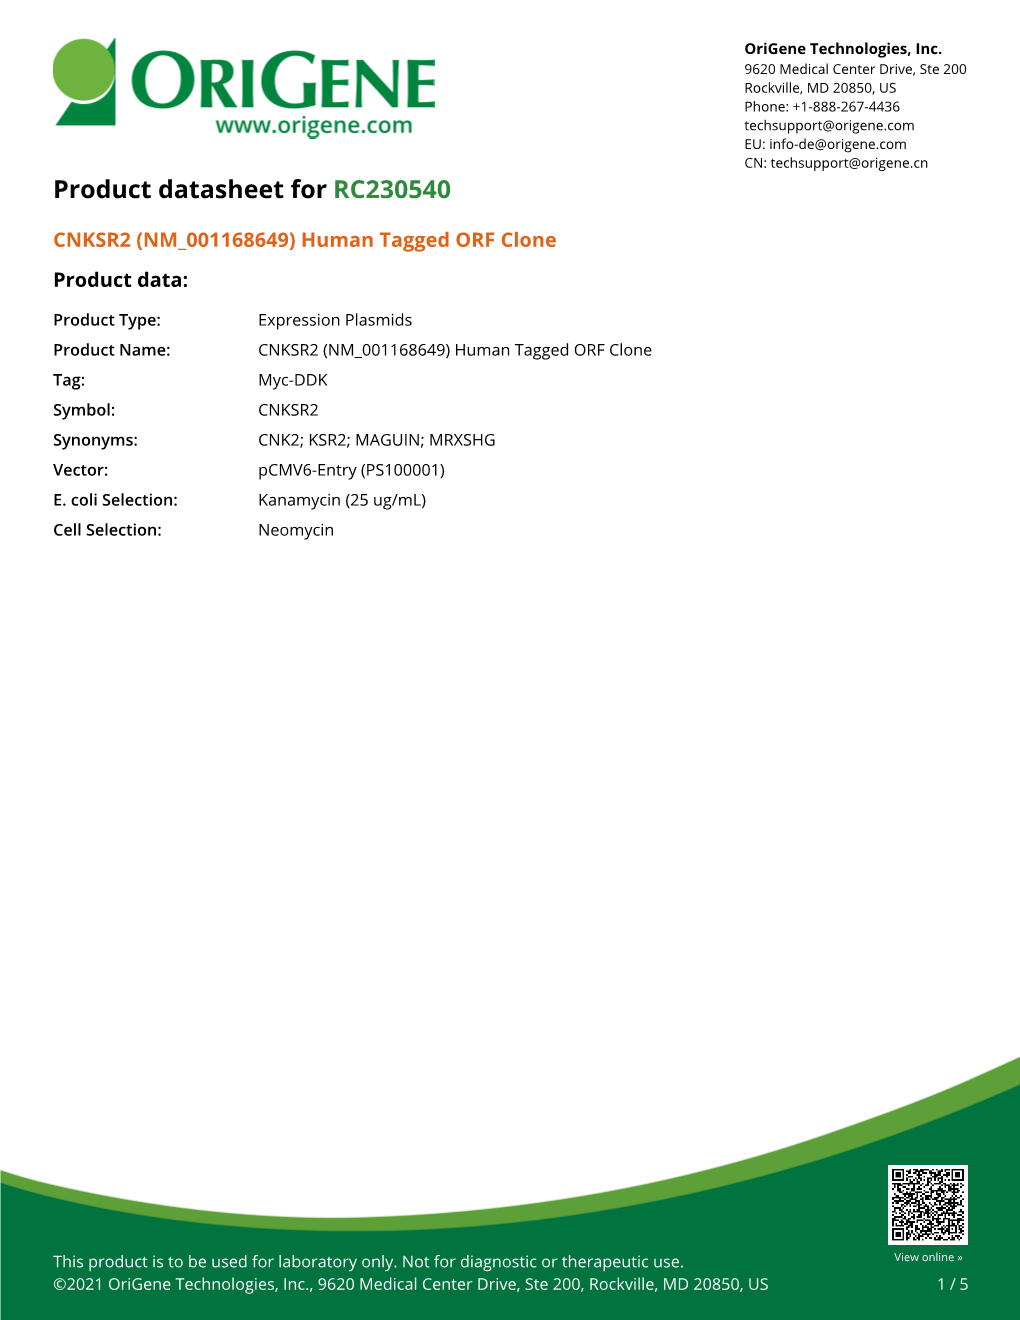 CNKSR2 (NM 001168649) Human Tagged ORF Clone Product Data